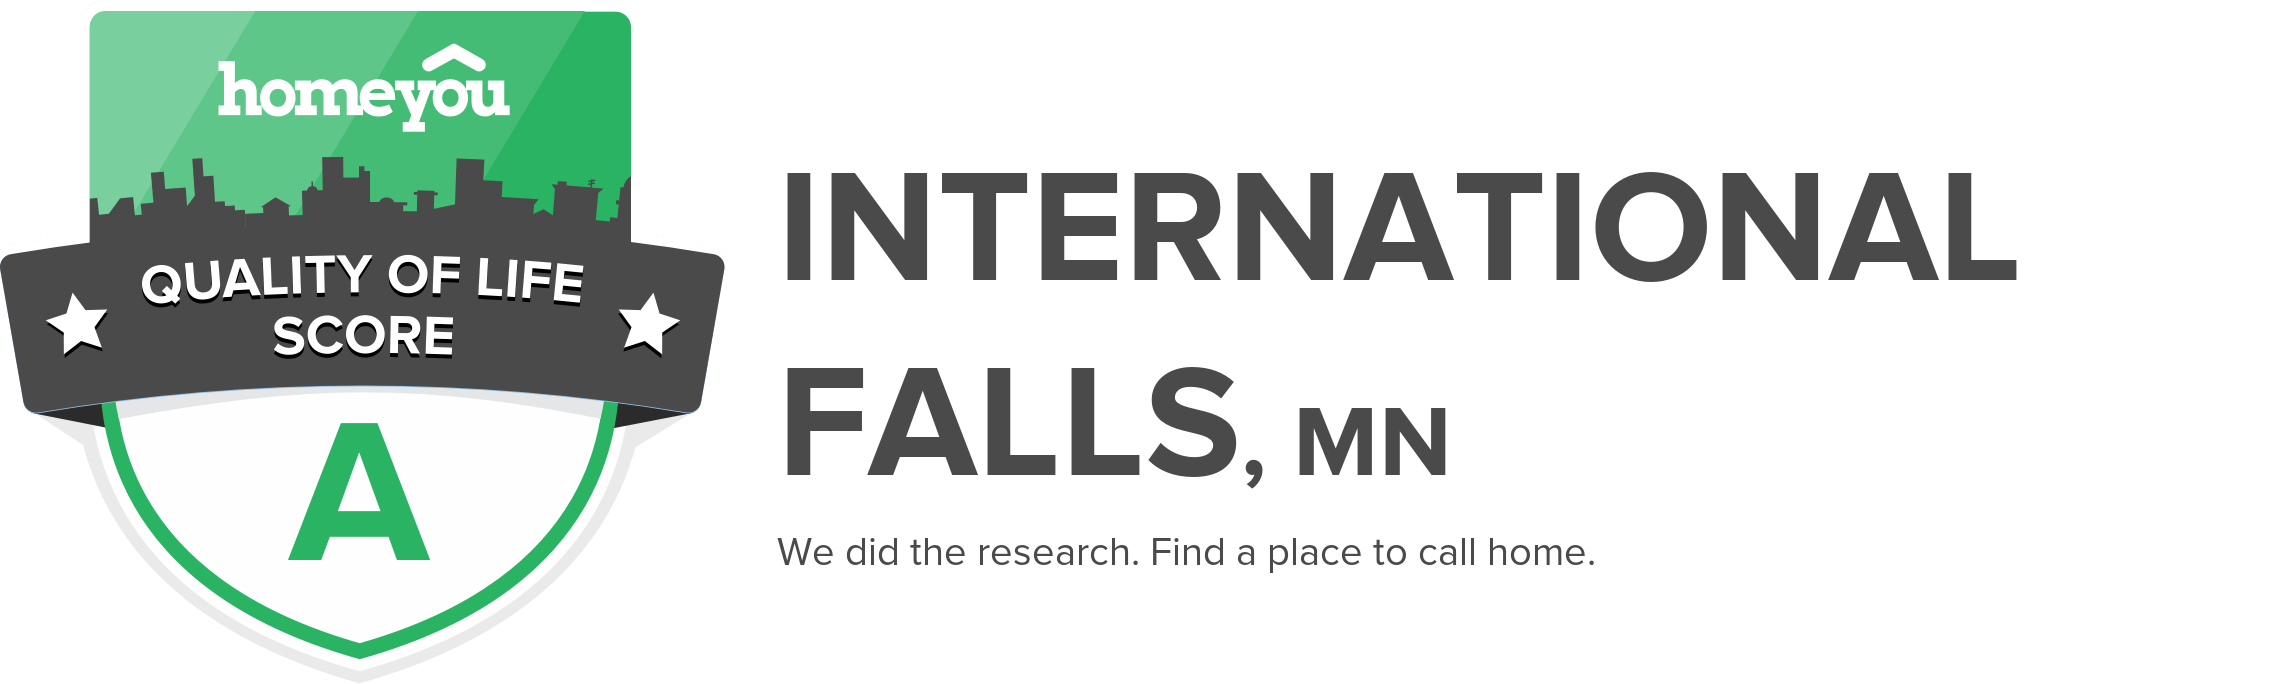 International Falls, MN